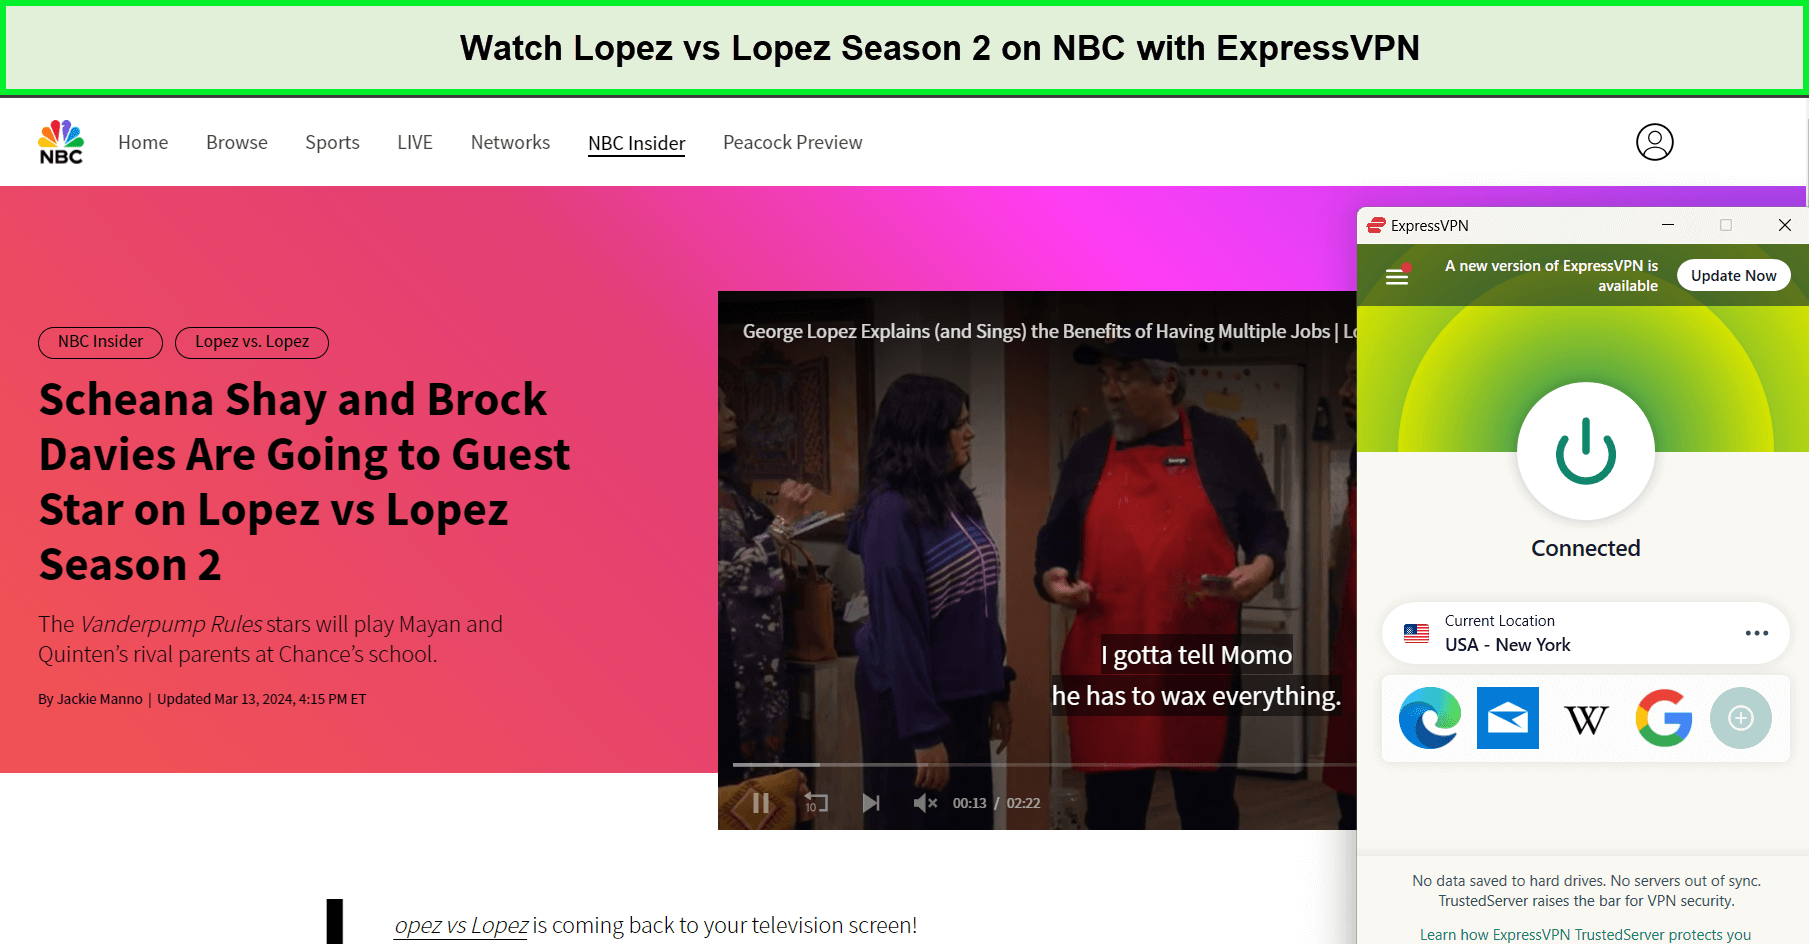 Watch-Lopez-vs-Lopez-Season-2-in-Italy-on-NBC